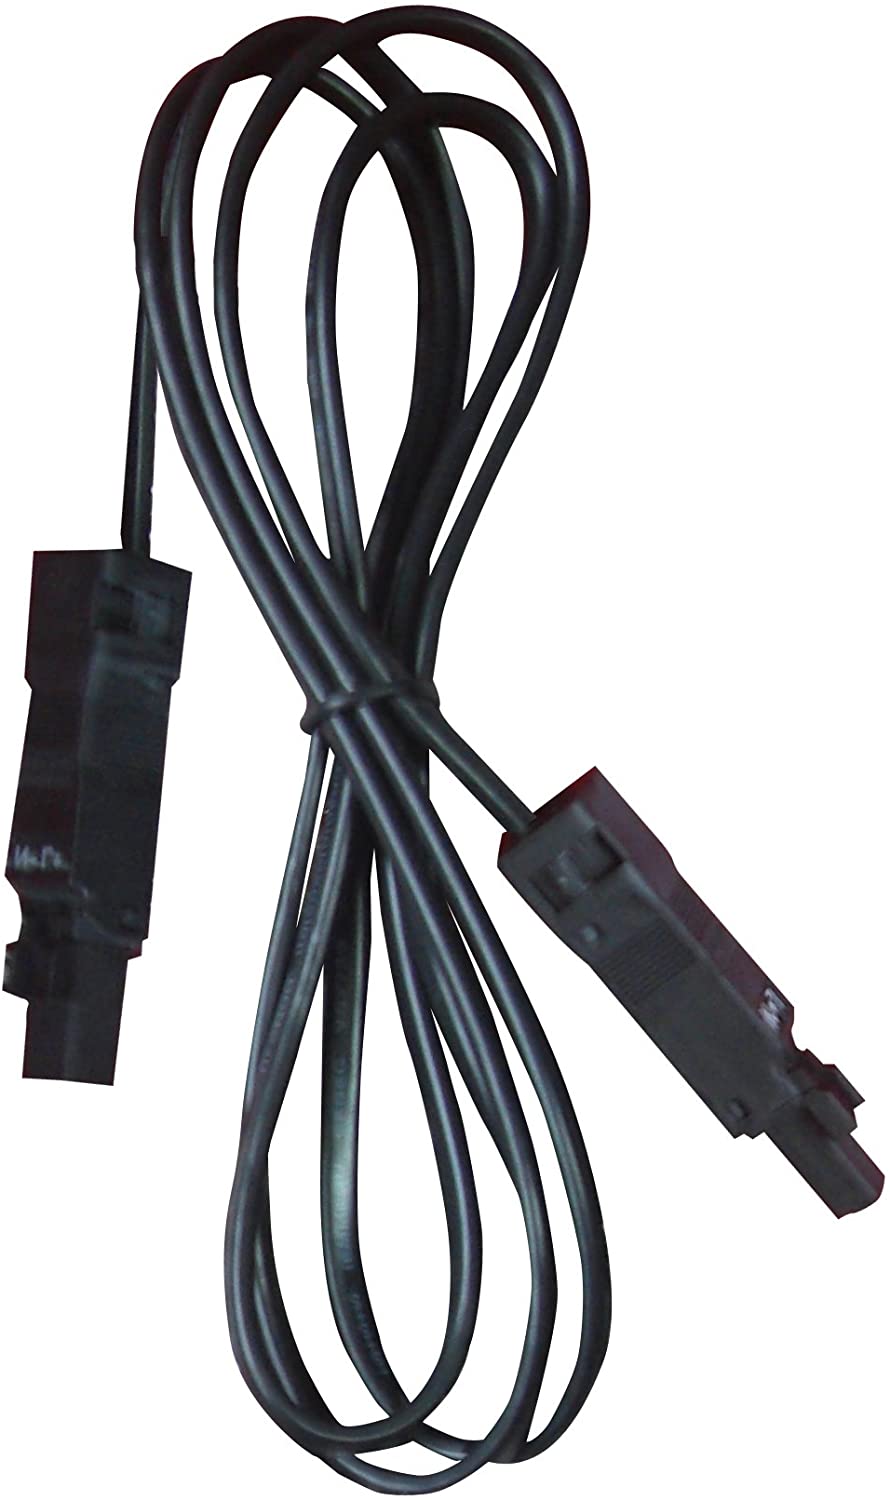 Cable Extender PRO 100 cm